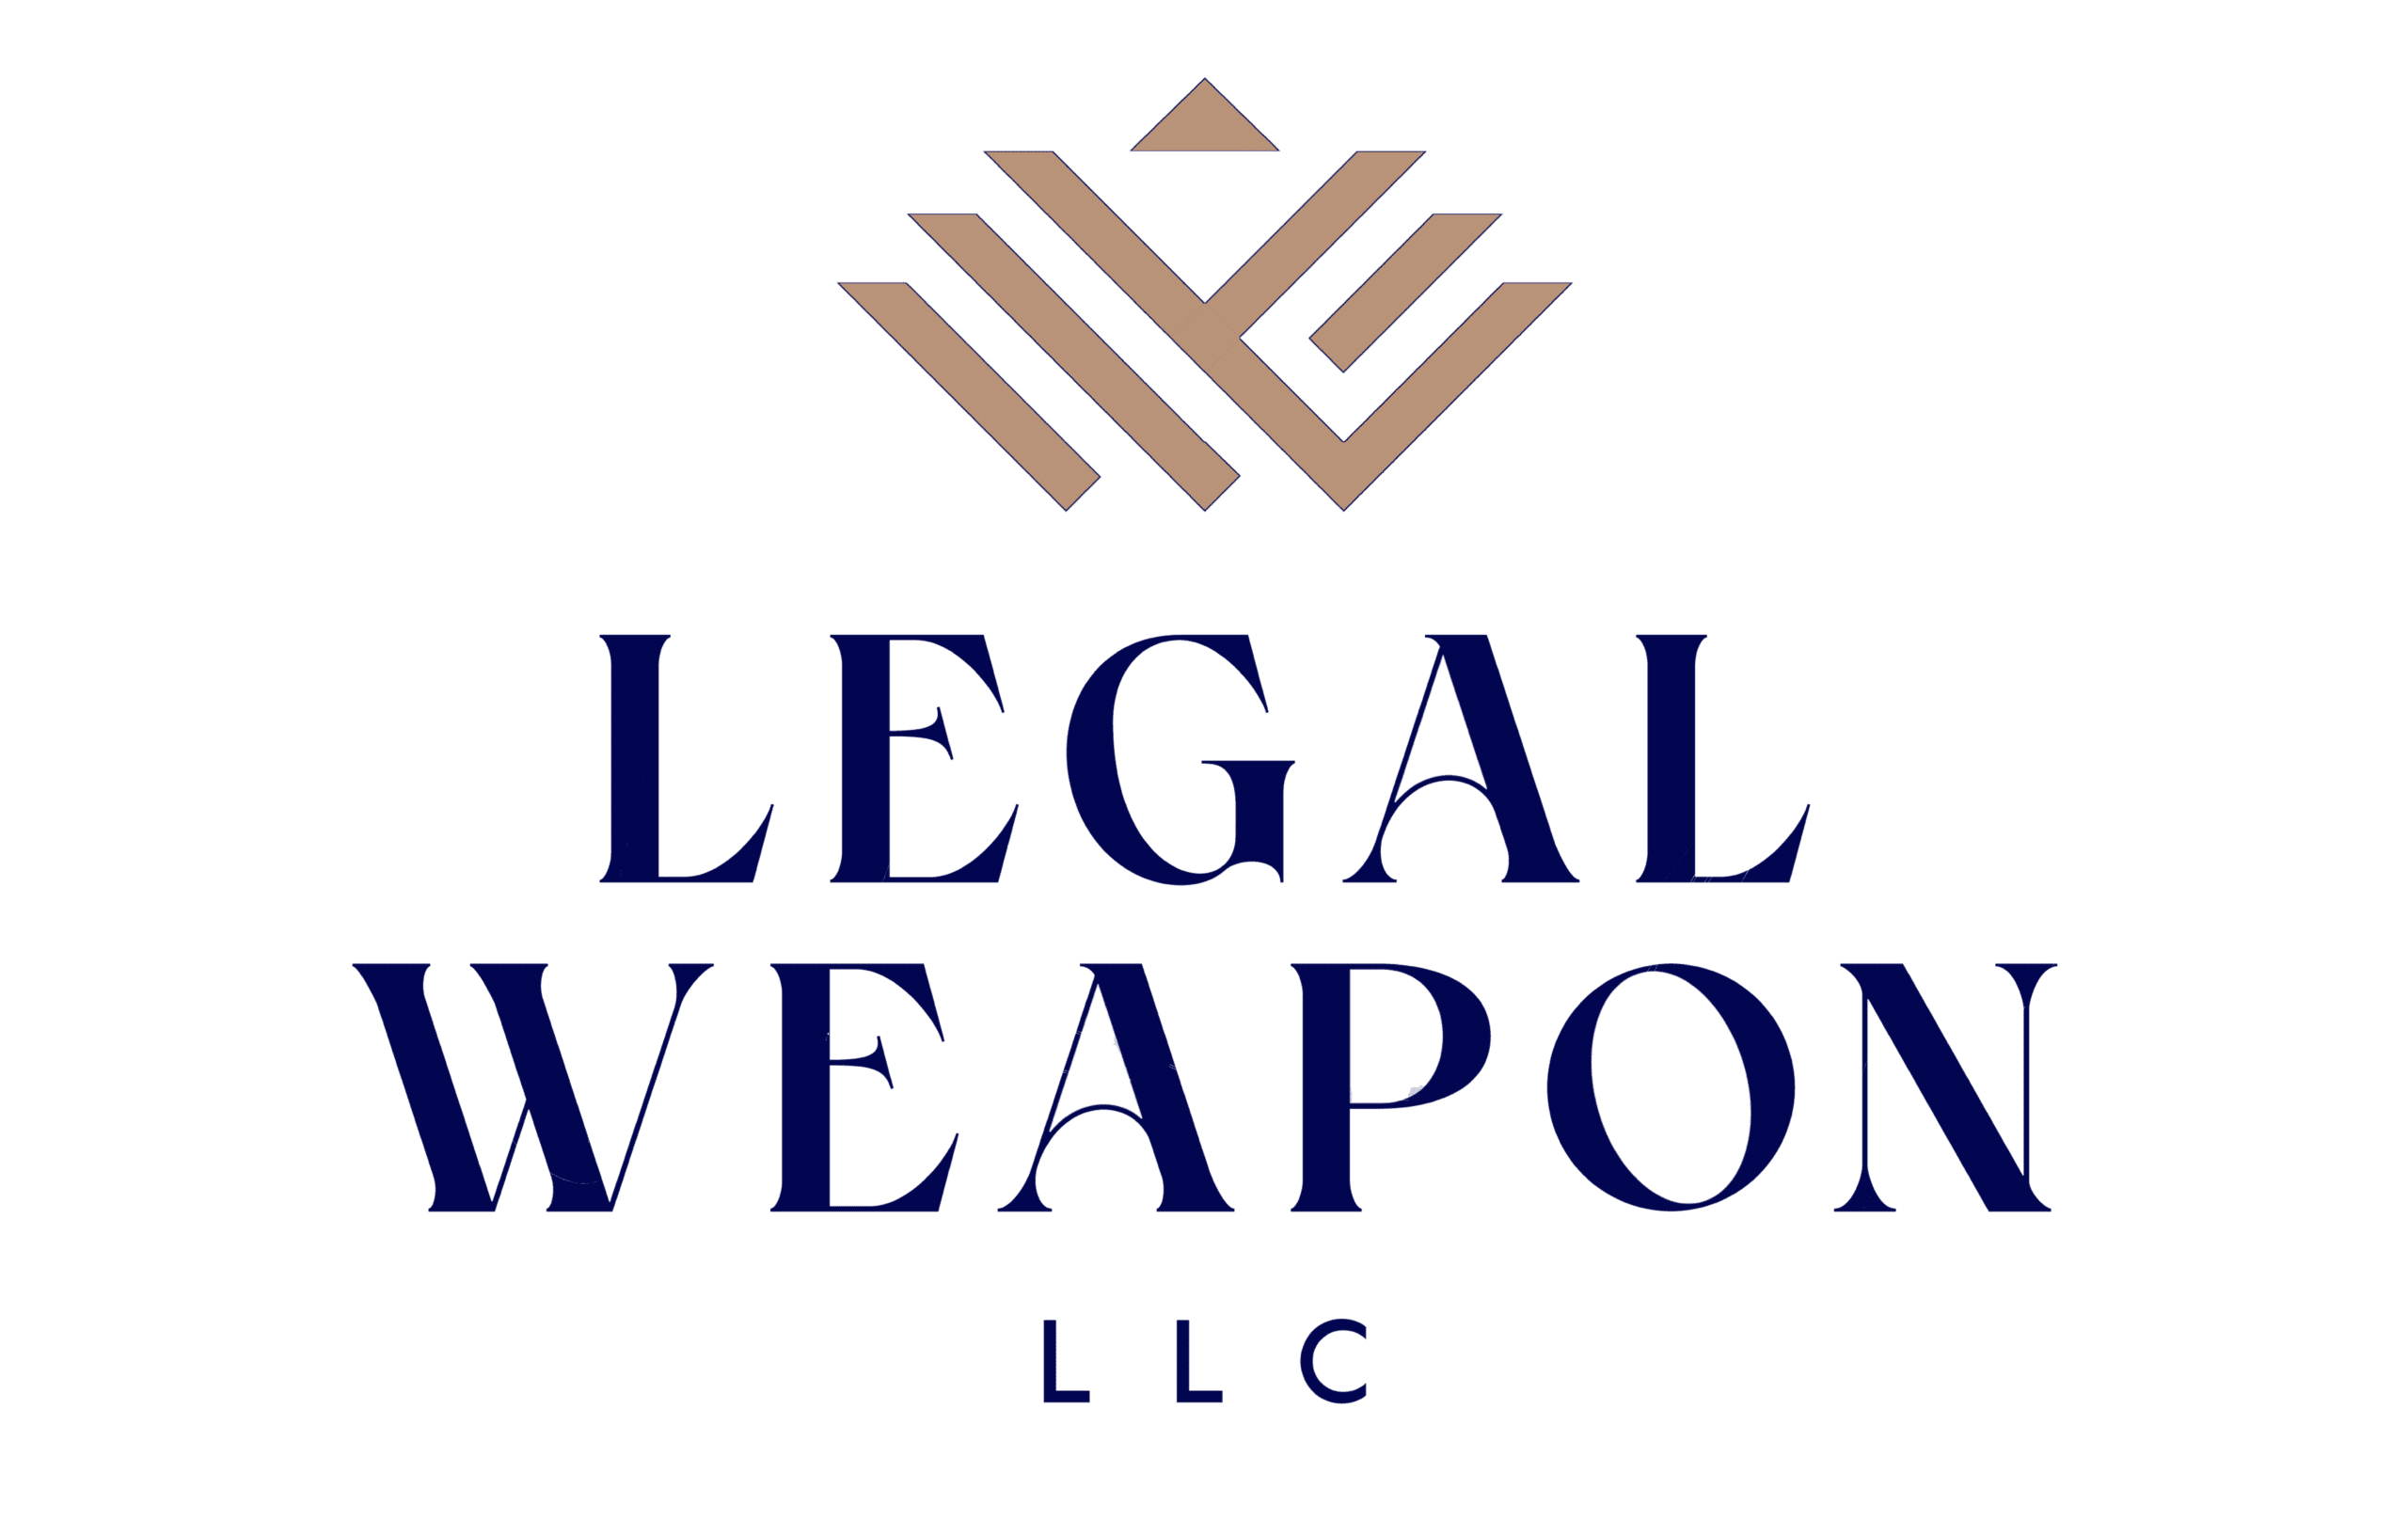 Legal Weapon LLC